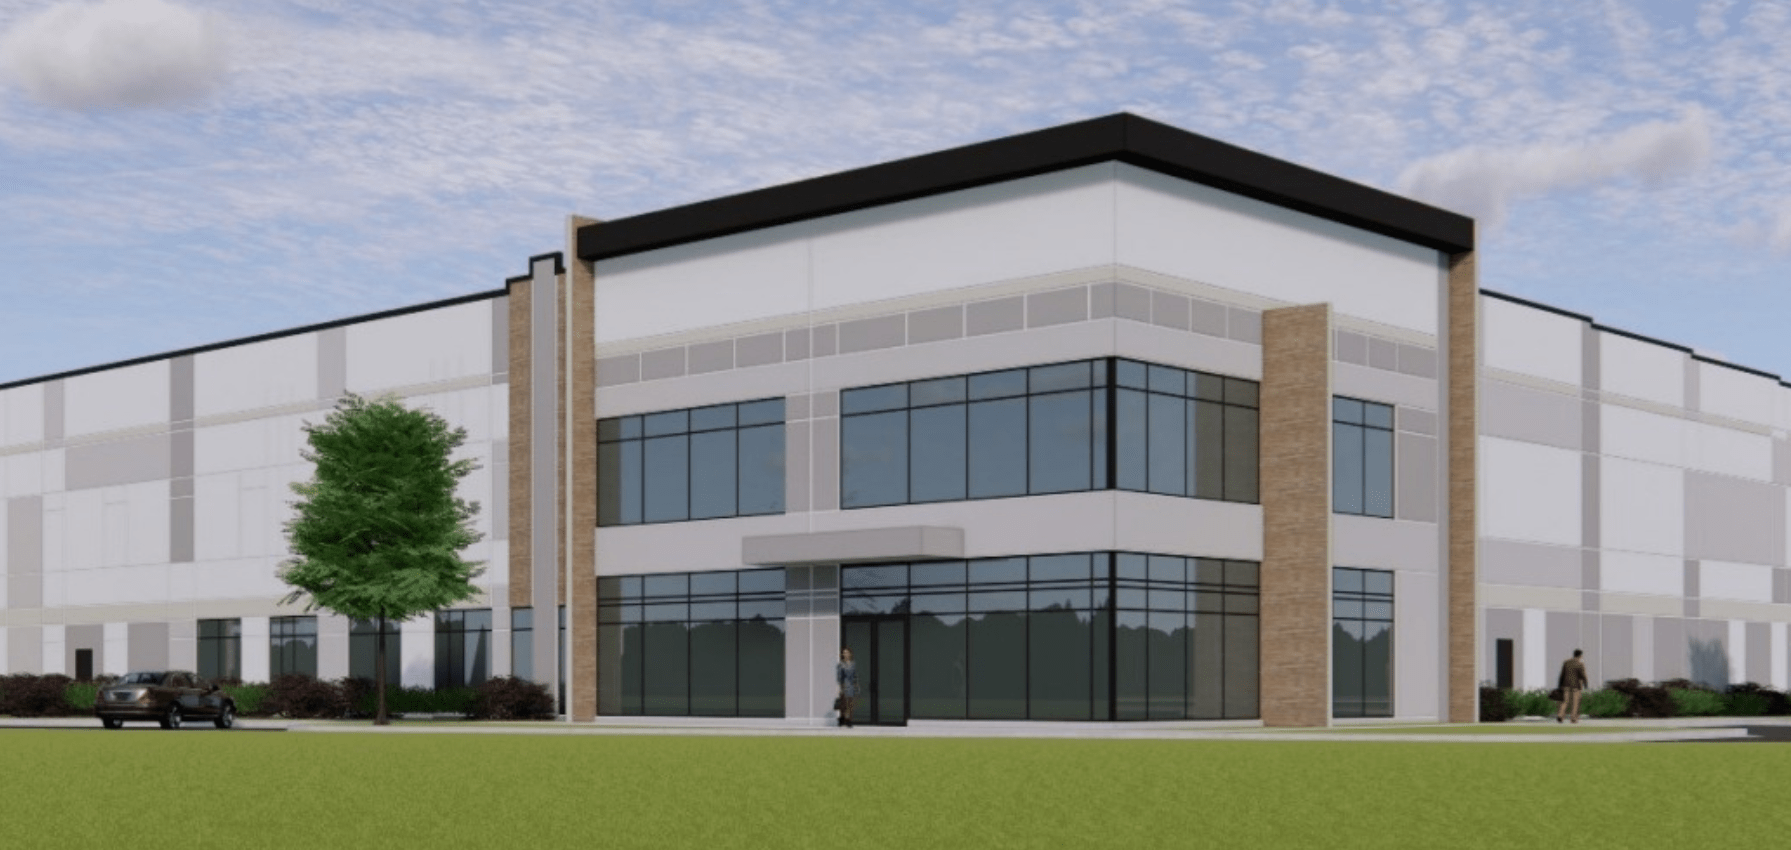 Apex Gateway – Building 1, Apex, NC